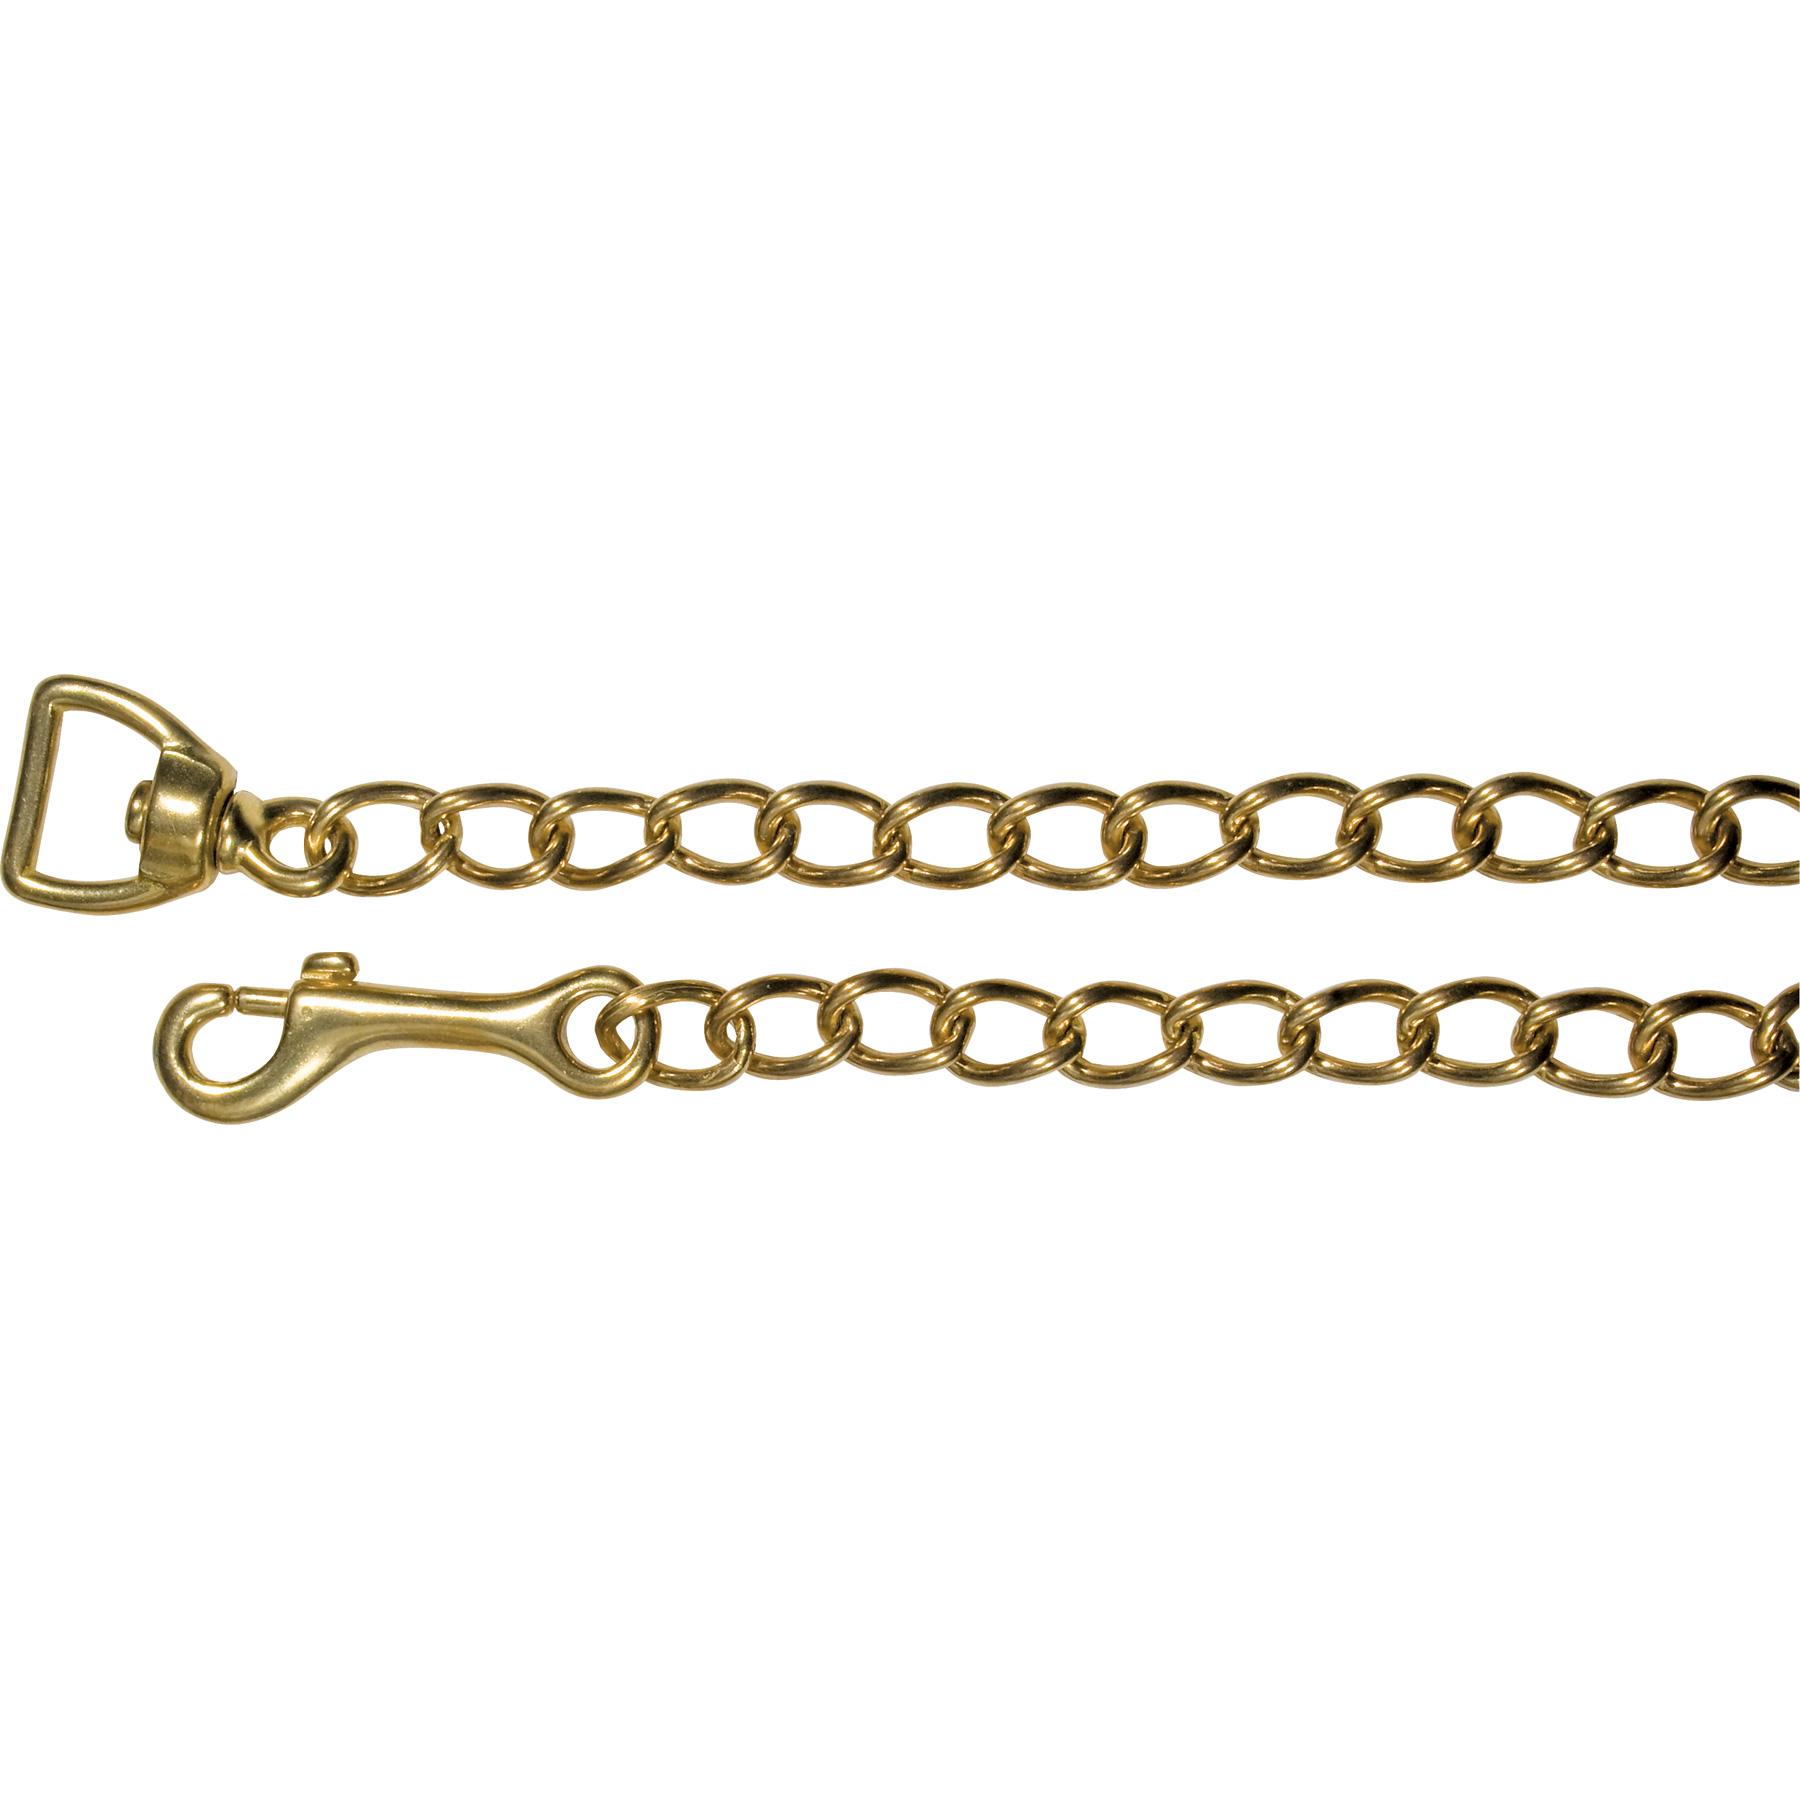 ai02459 Heavy Duty Solid Brass Chain